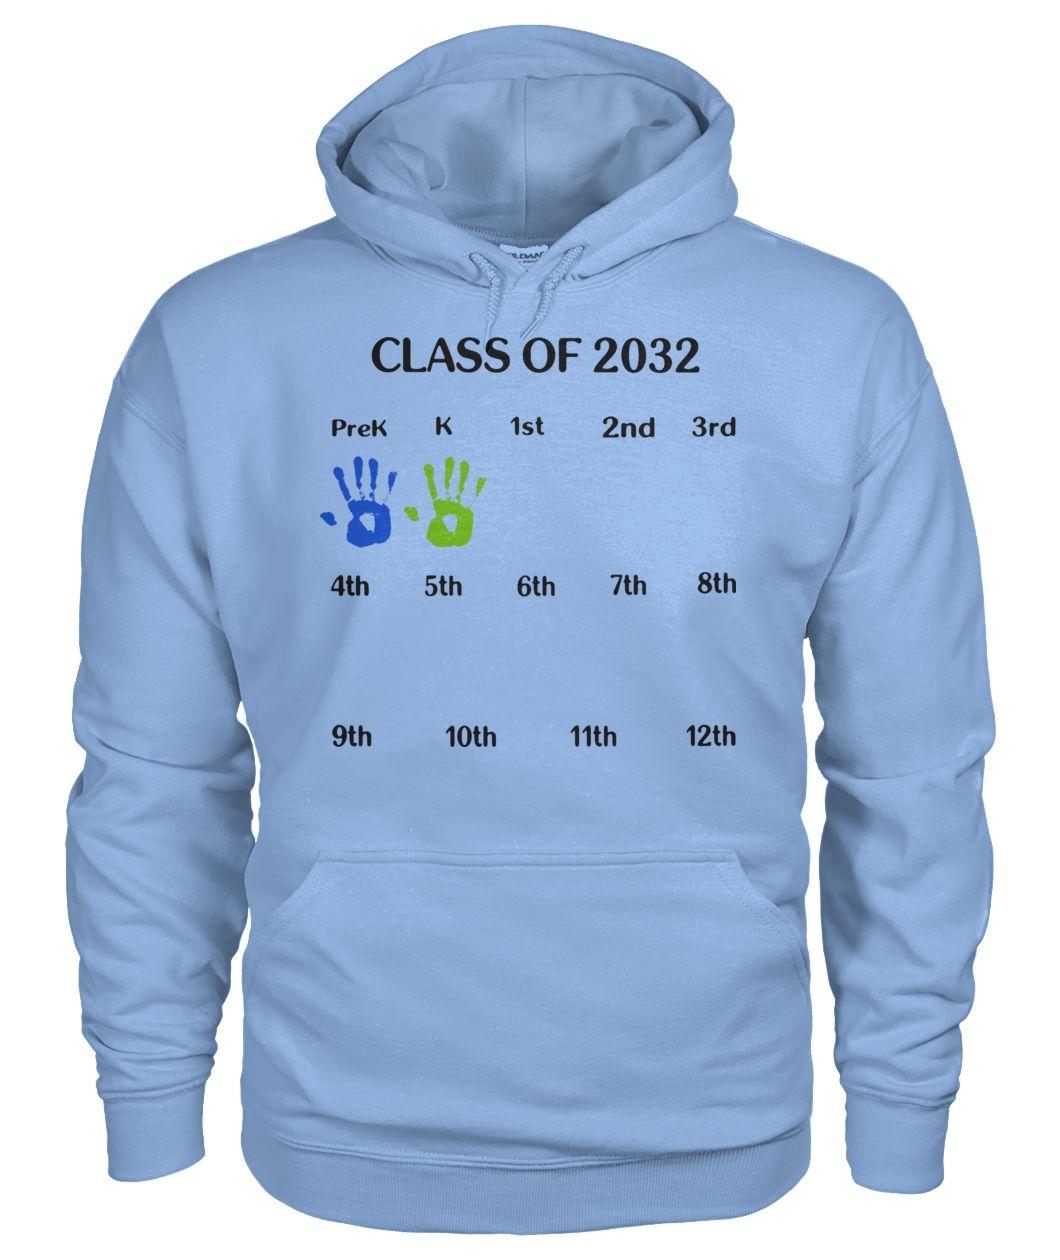 Class of 2032 grow with me gildan hoodie